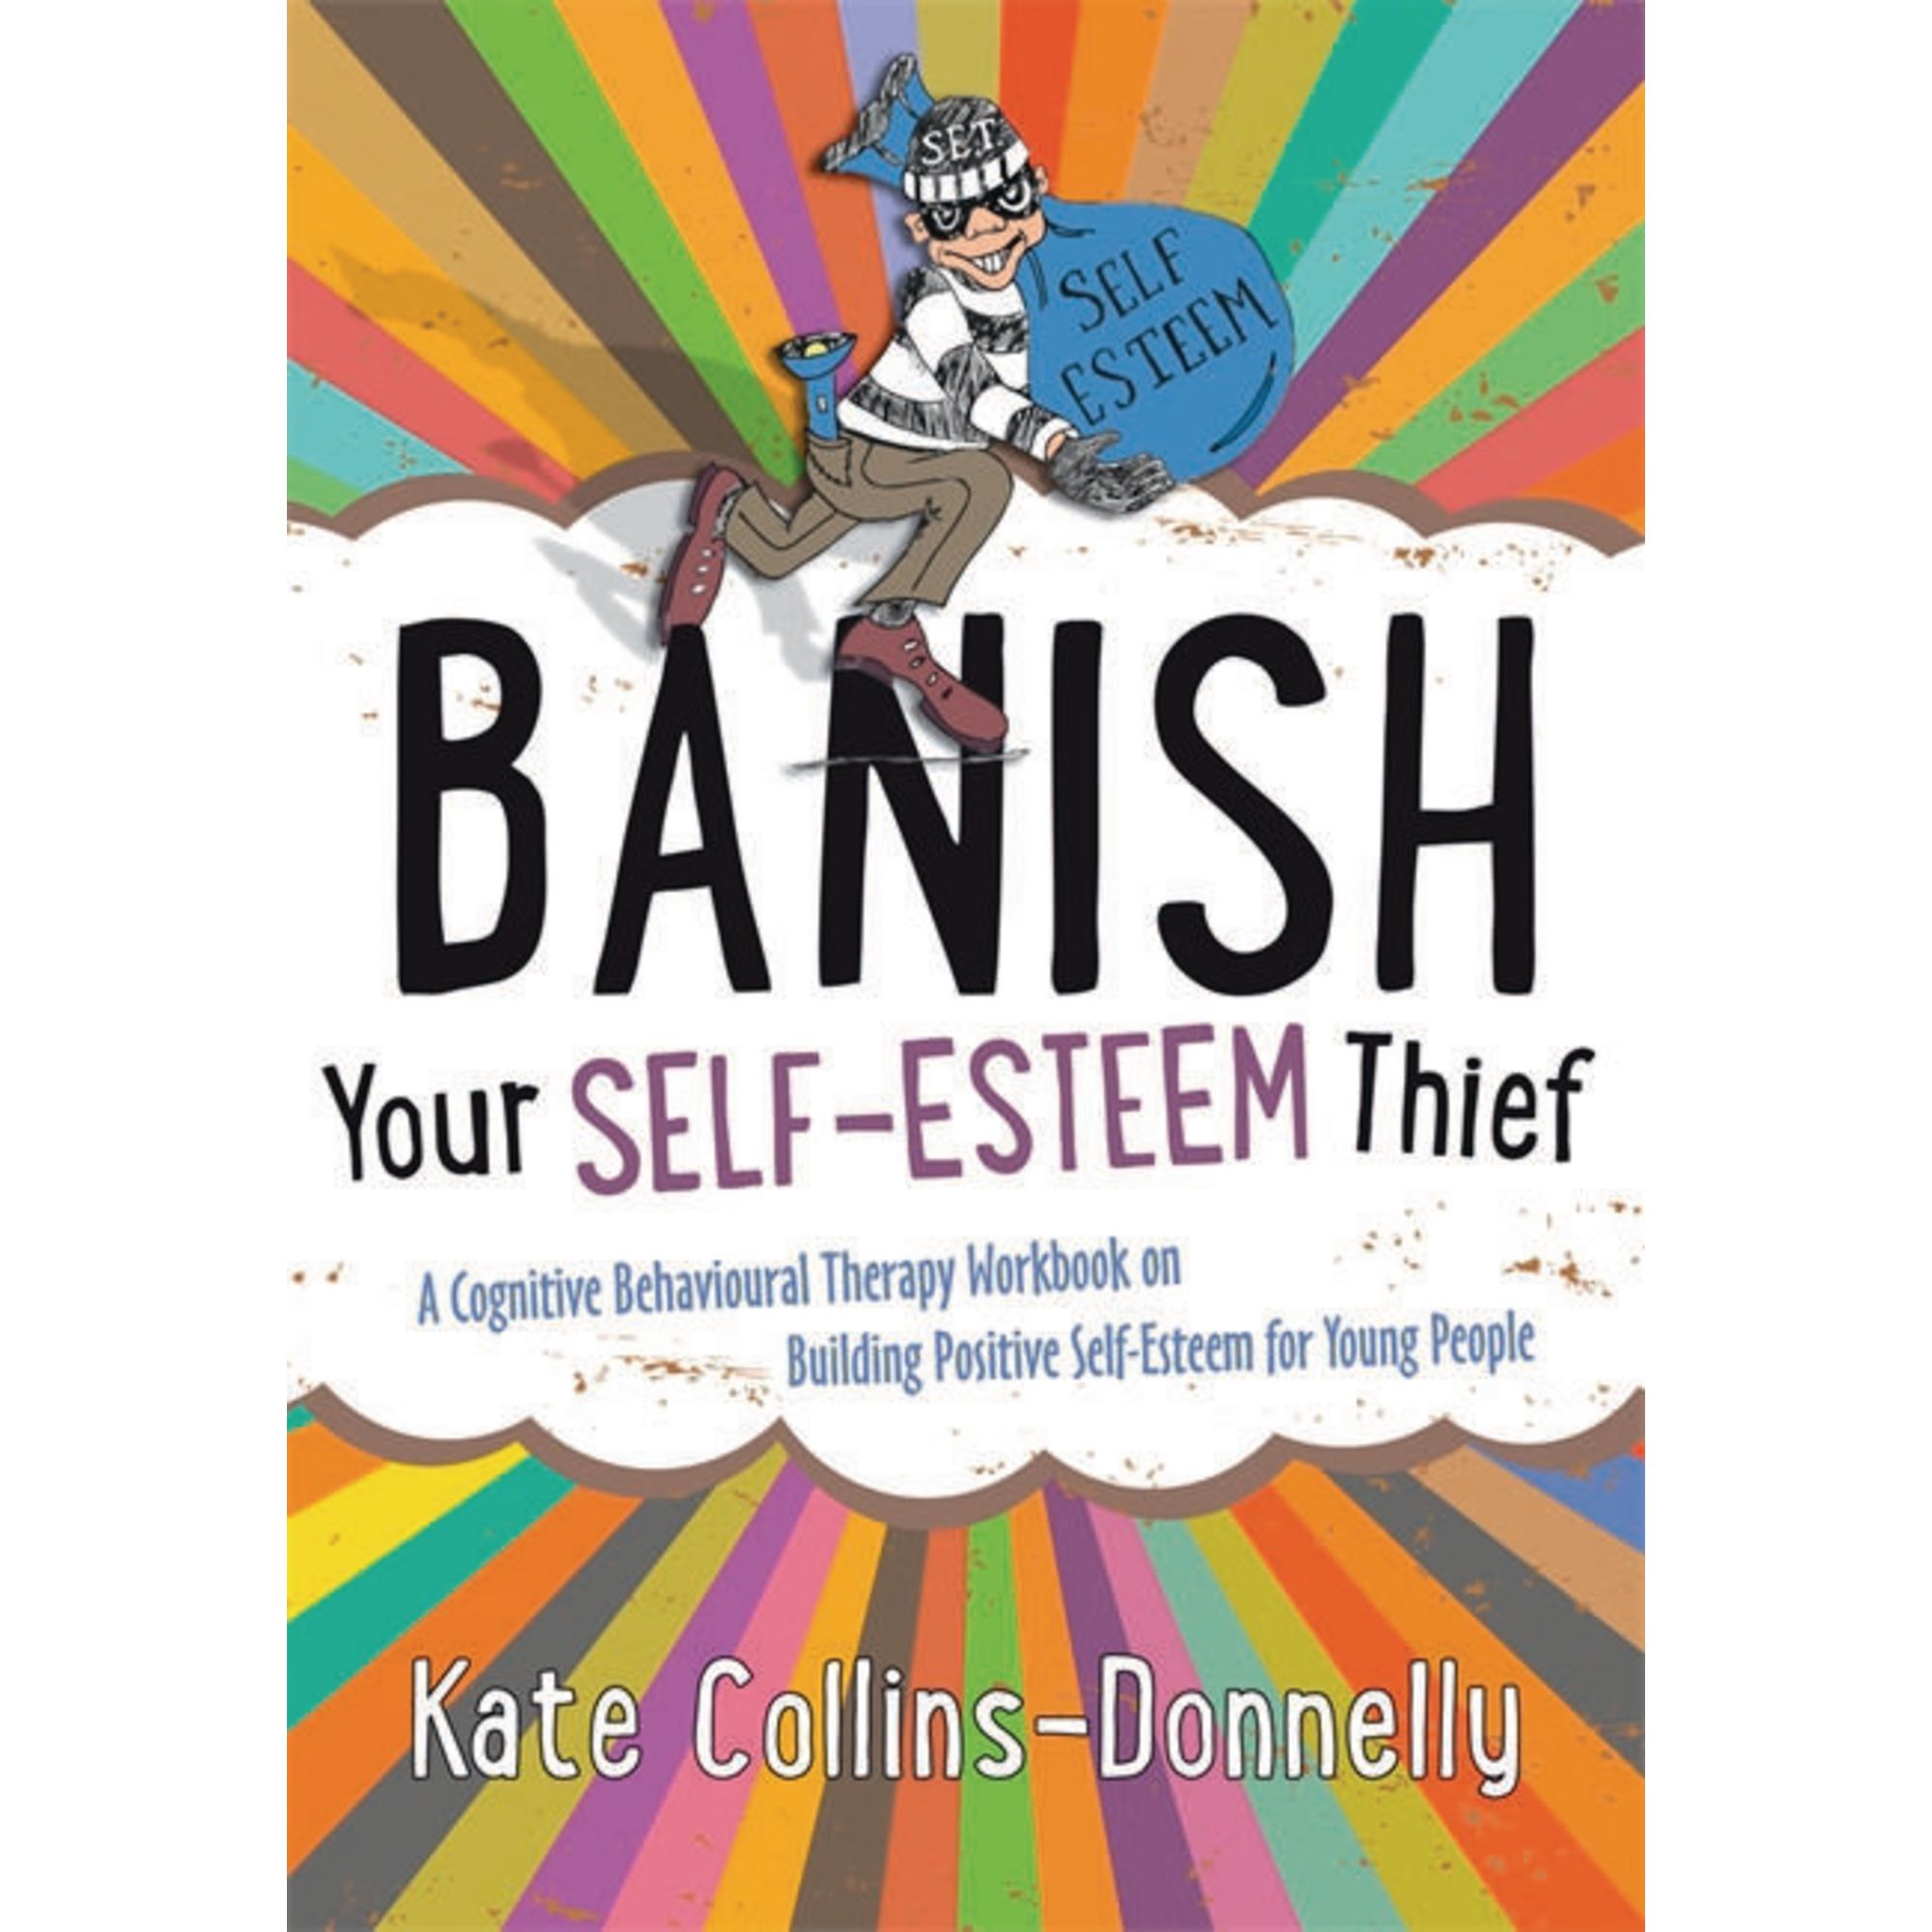 Banish Your Self-esteem Thief